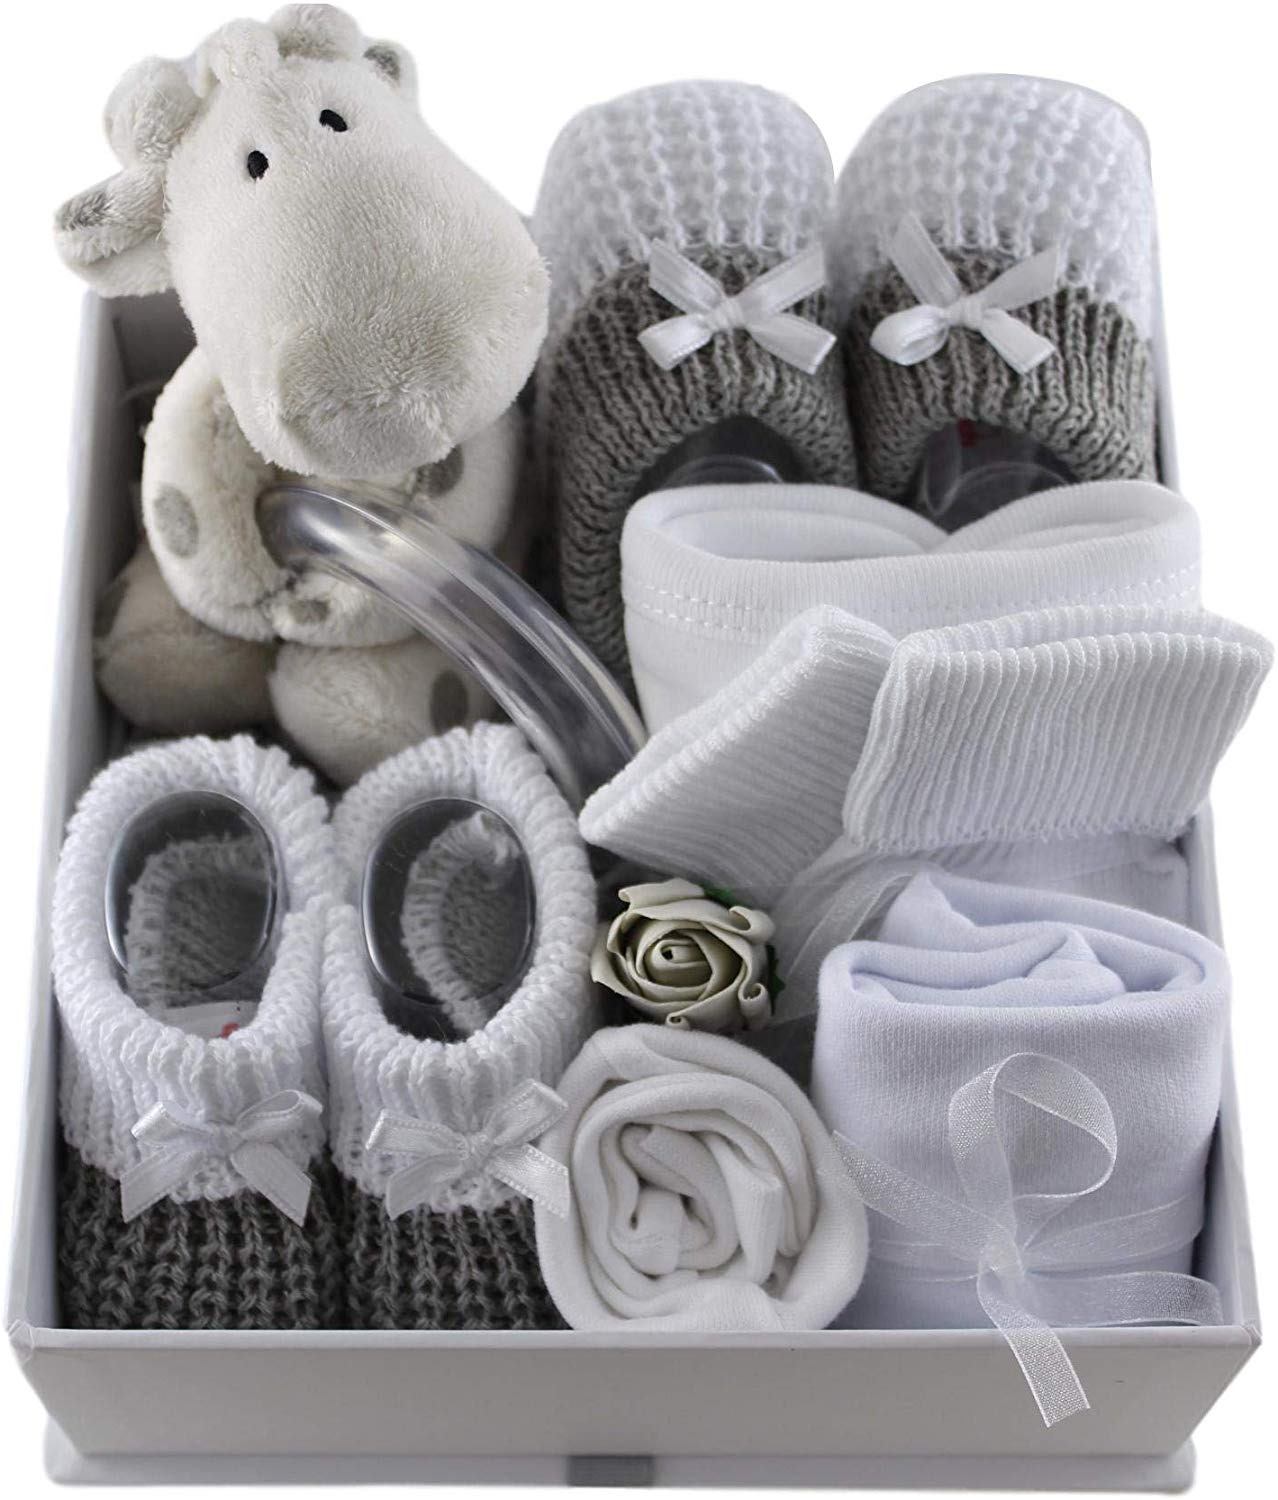 Twinkle Keepsake Box Baby Shower Gift New Baby Gift